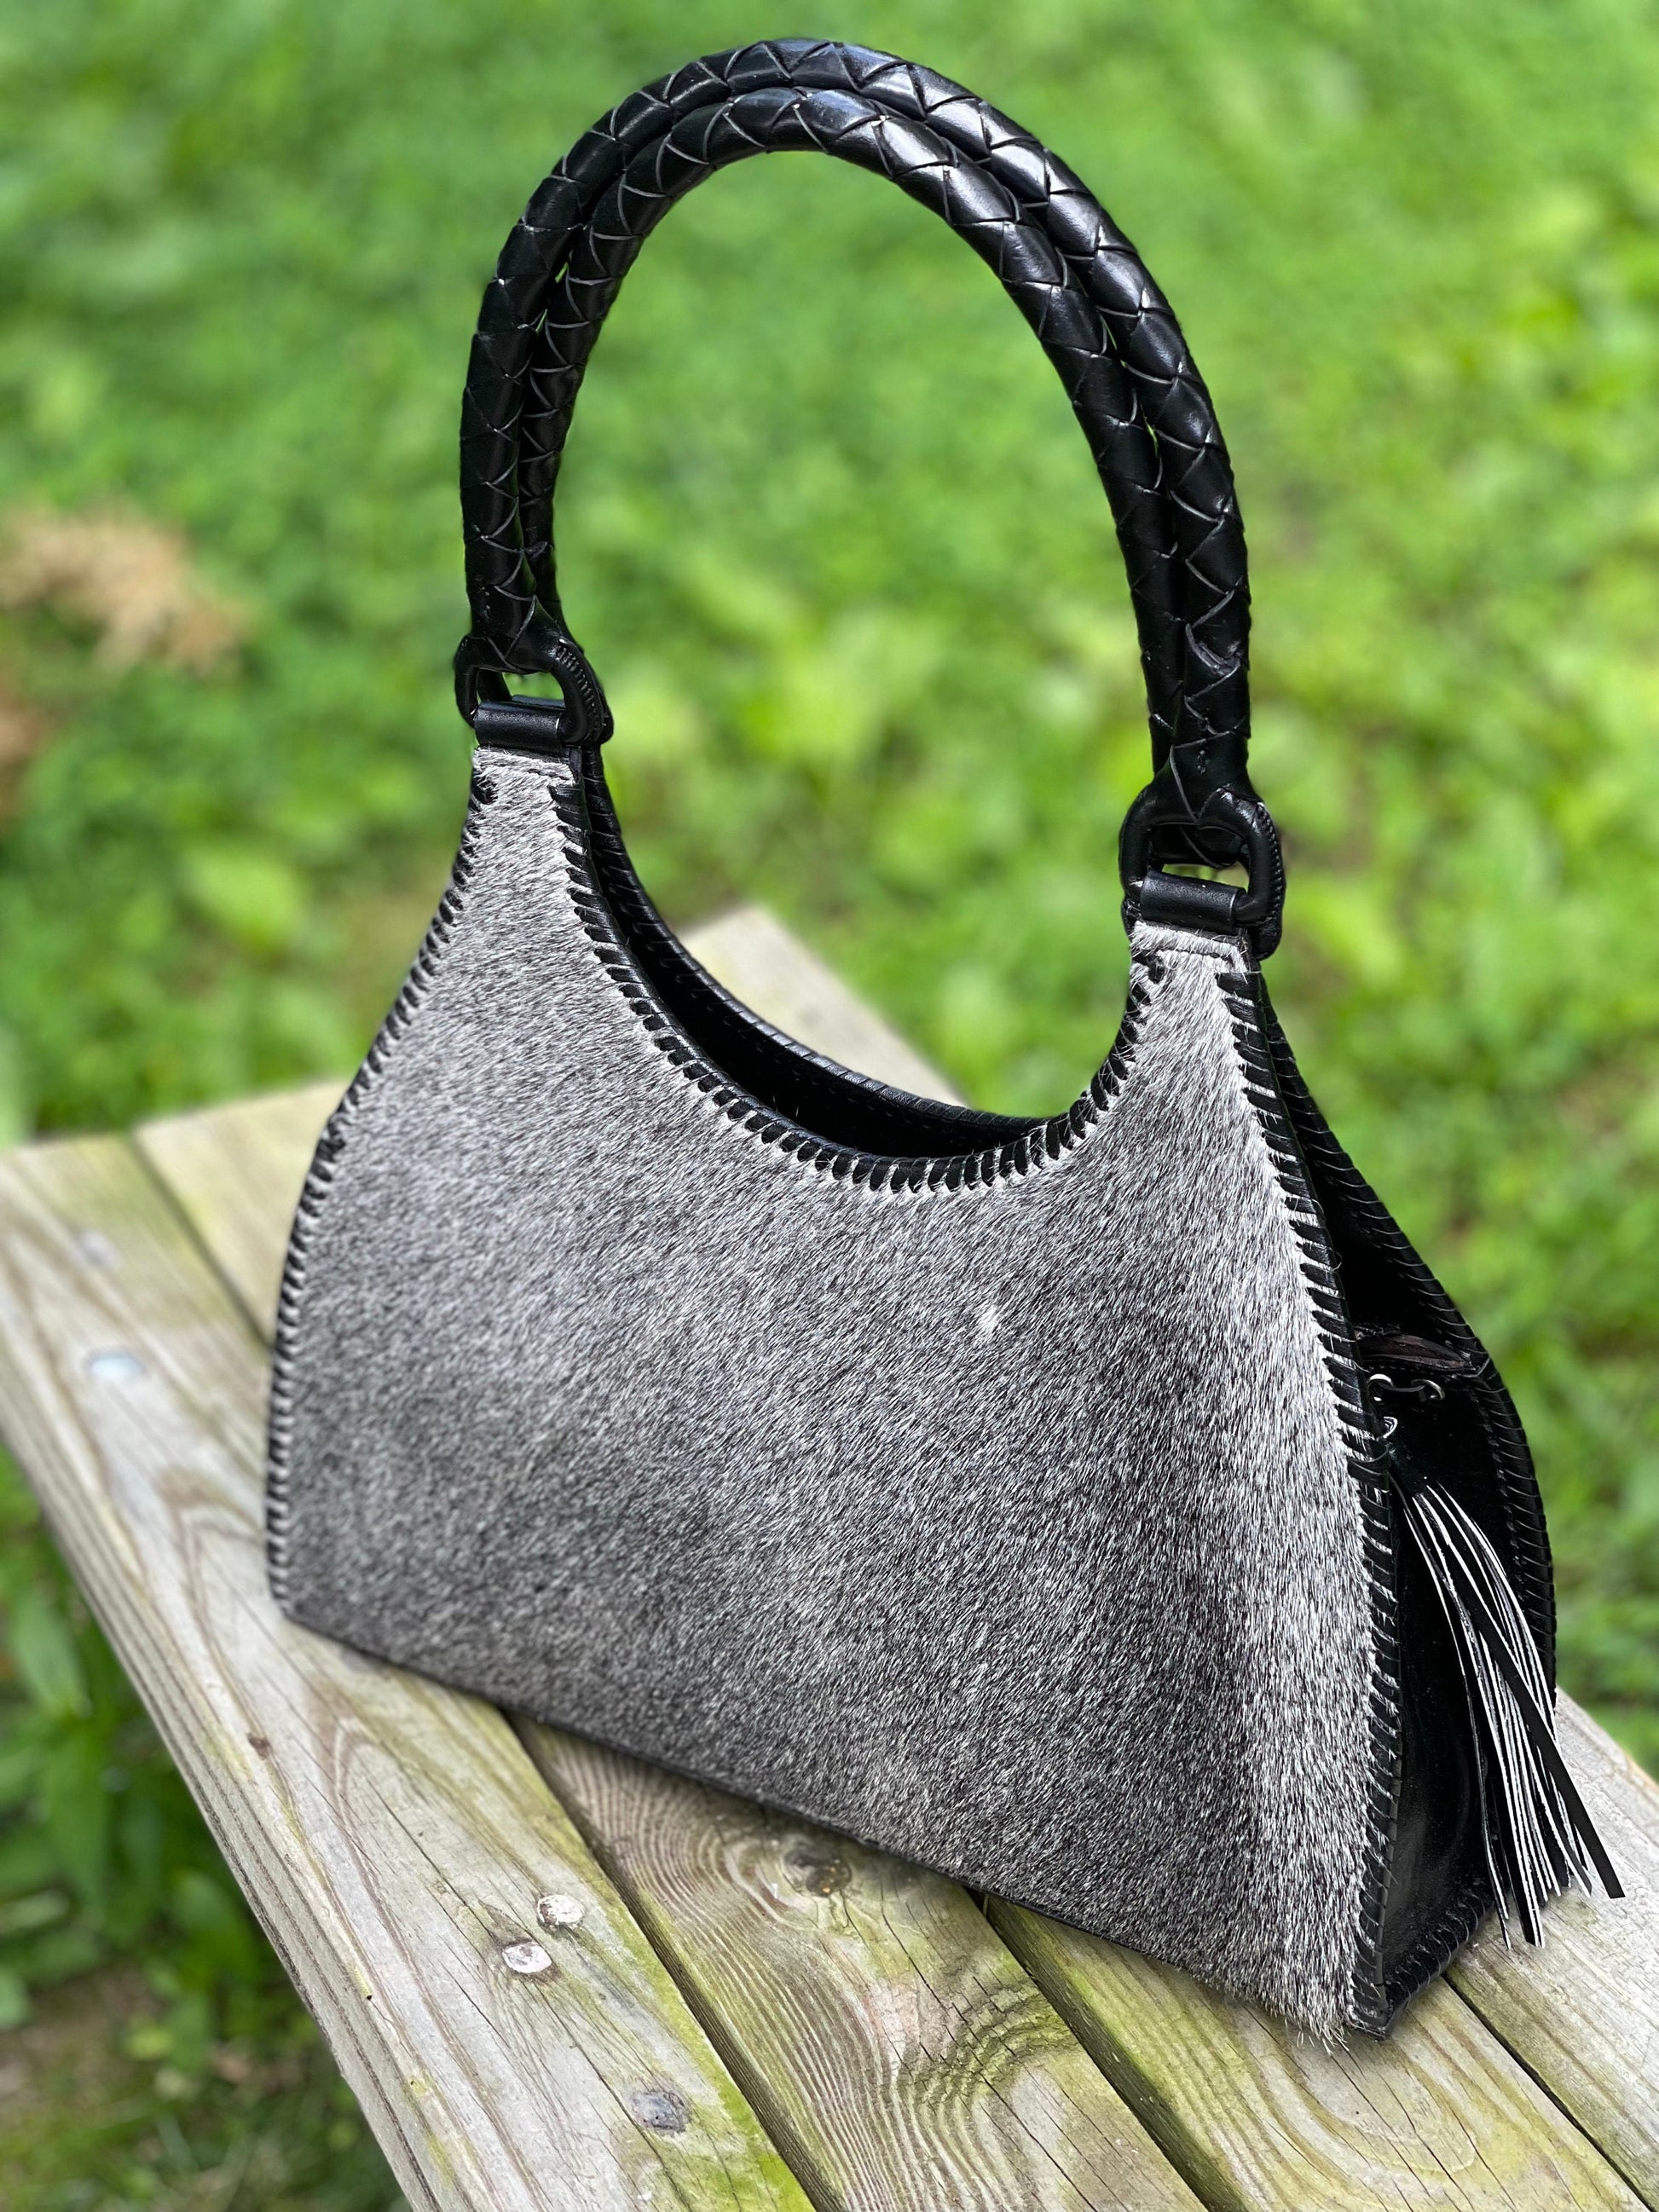 Calf Hair Leather Shoulder Hobo Bag, ALLE "LUNA PELO", Gray Tones - ALLE Handbags